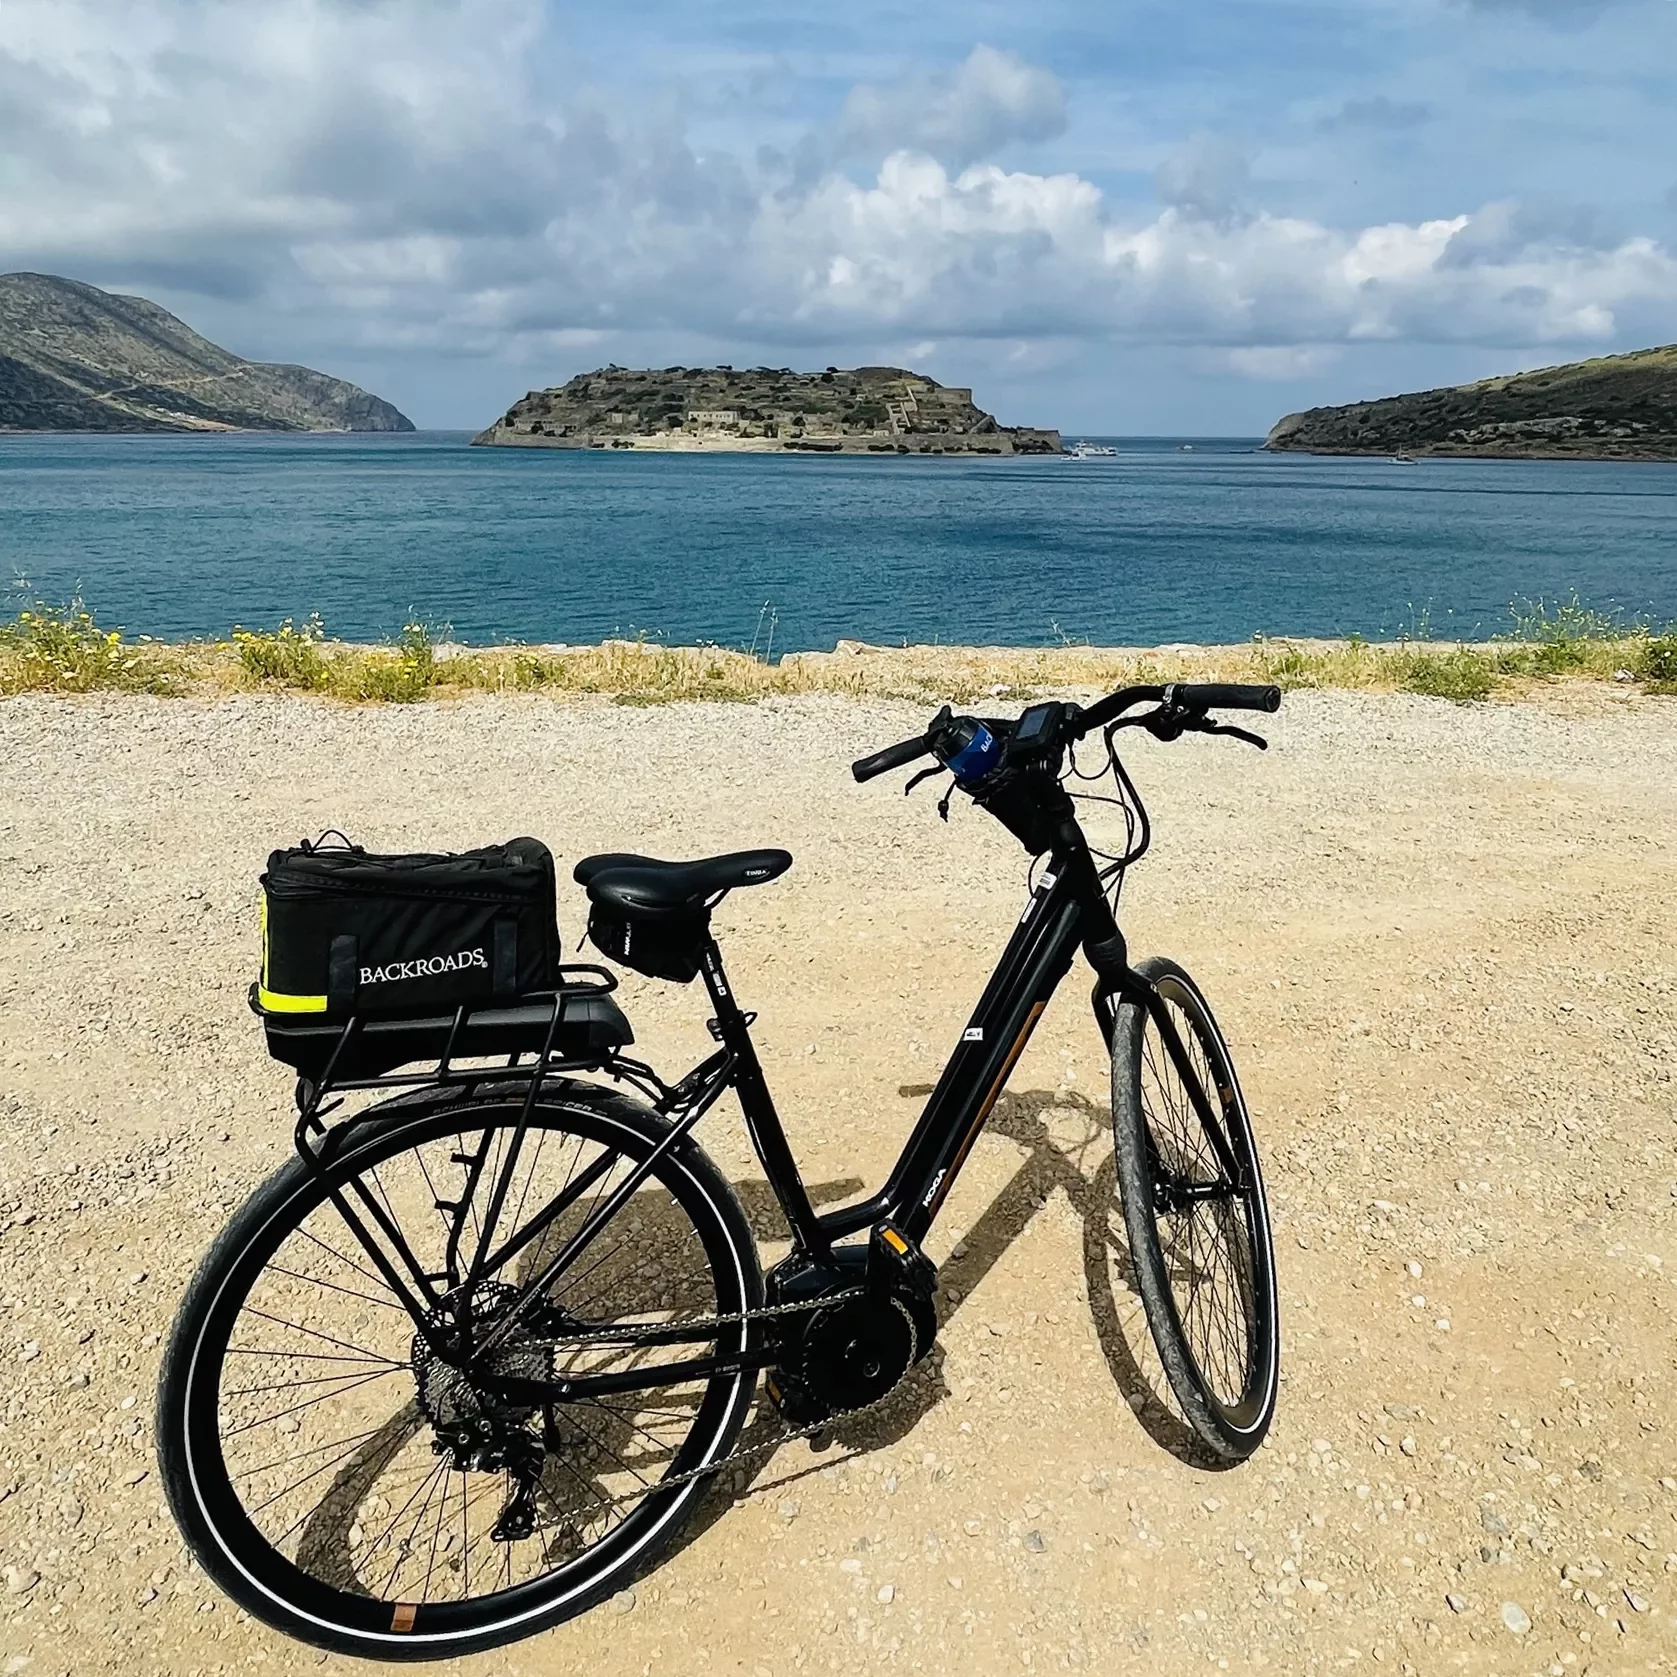 POV shot overlooking ocean, hilly islands, bike in foreground.